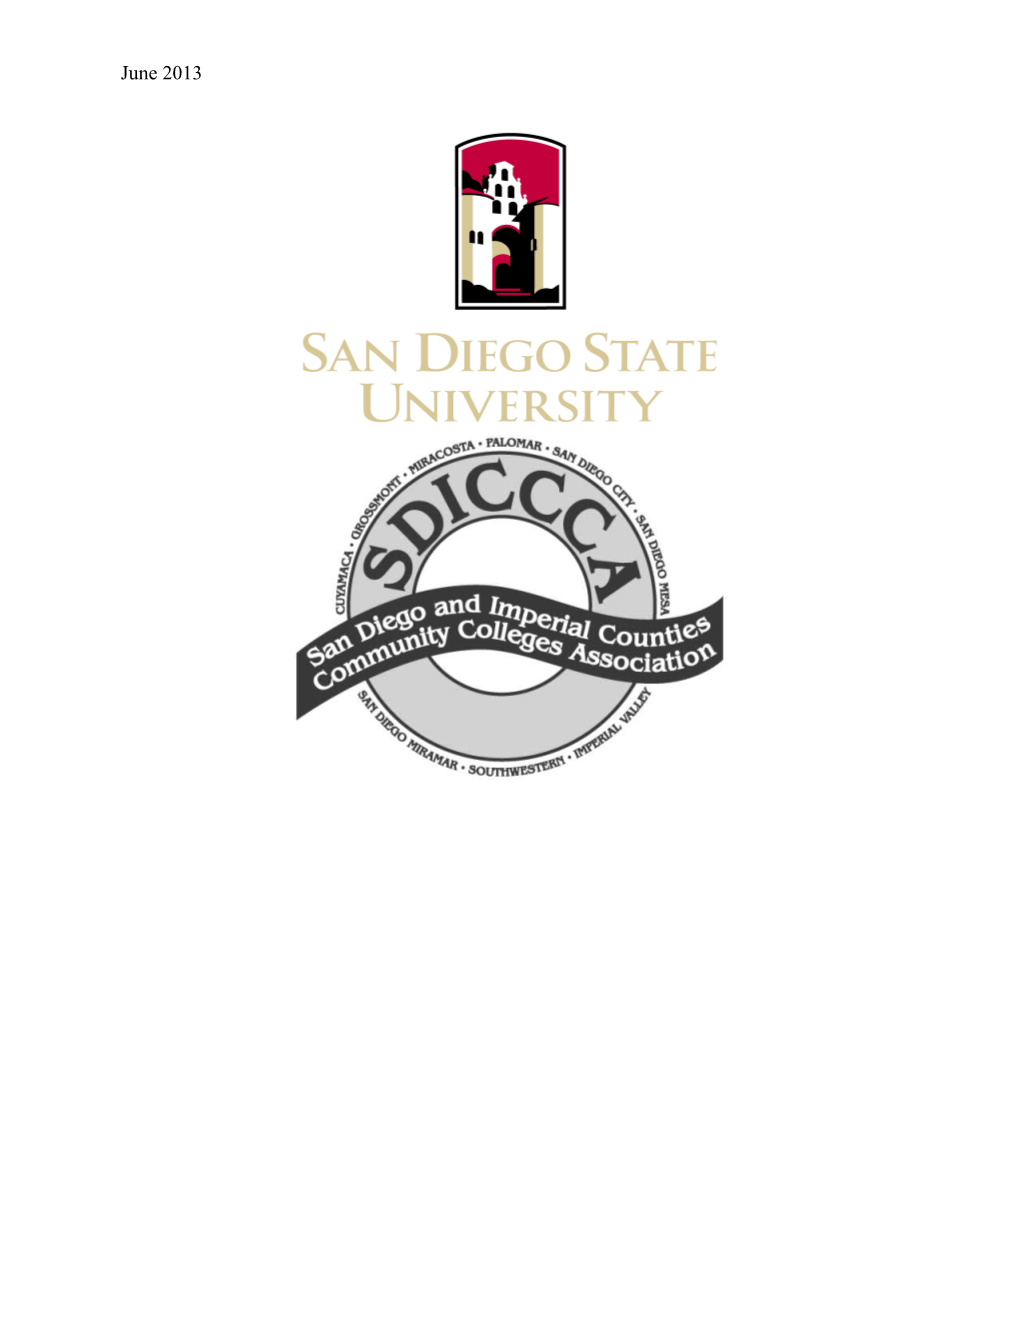 A Partnership Between San Diego State University